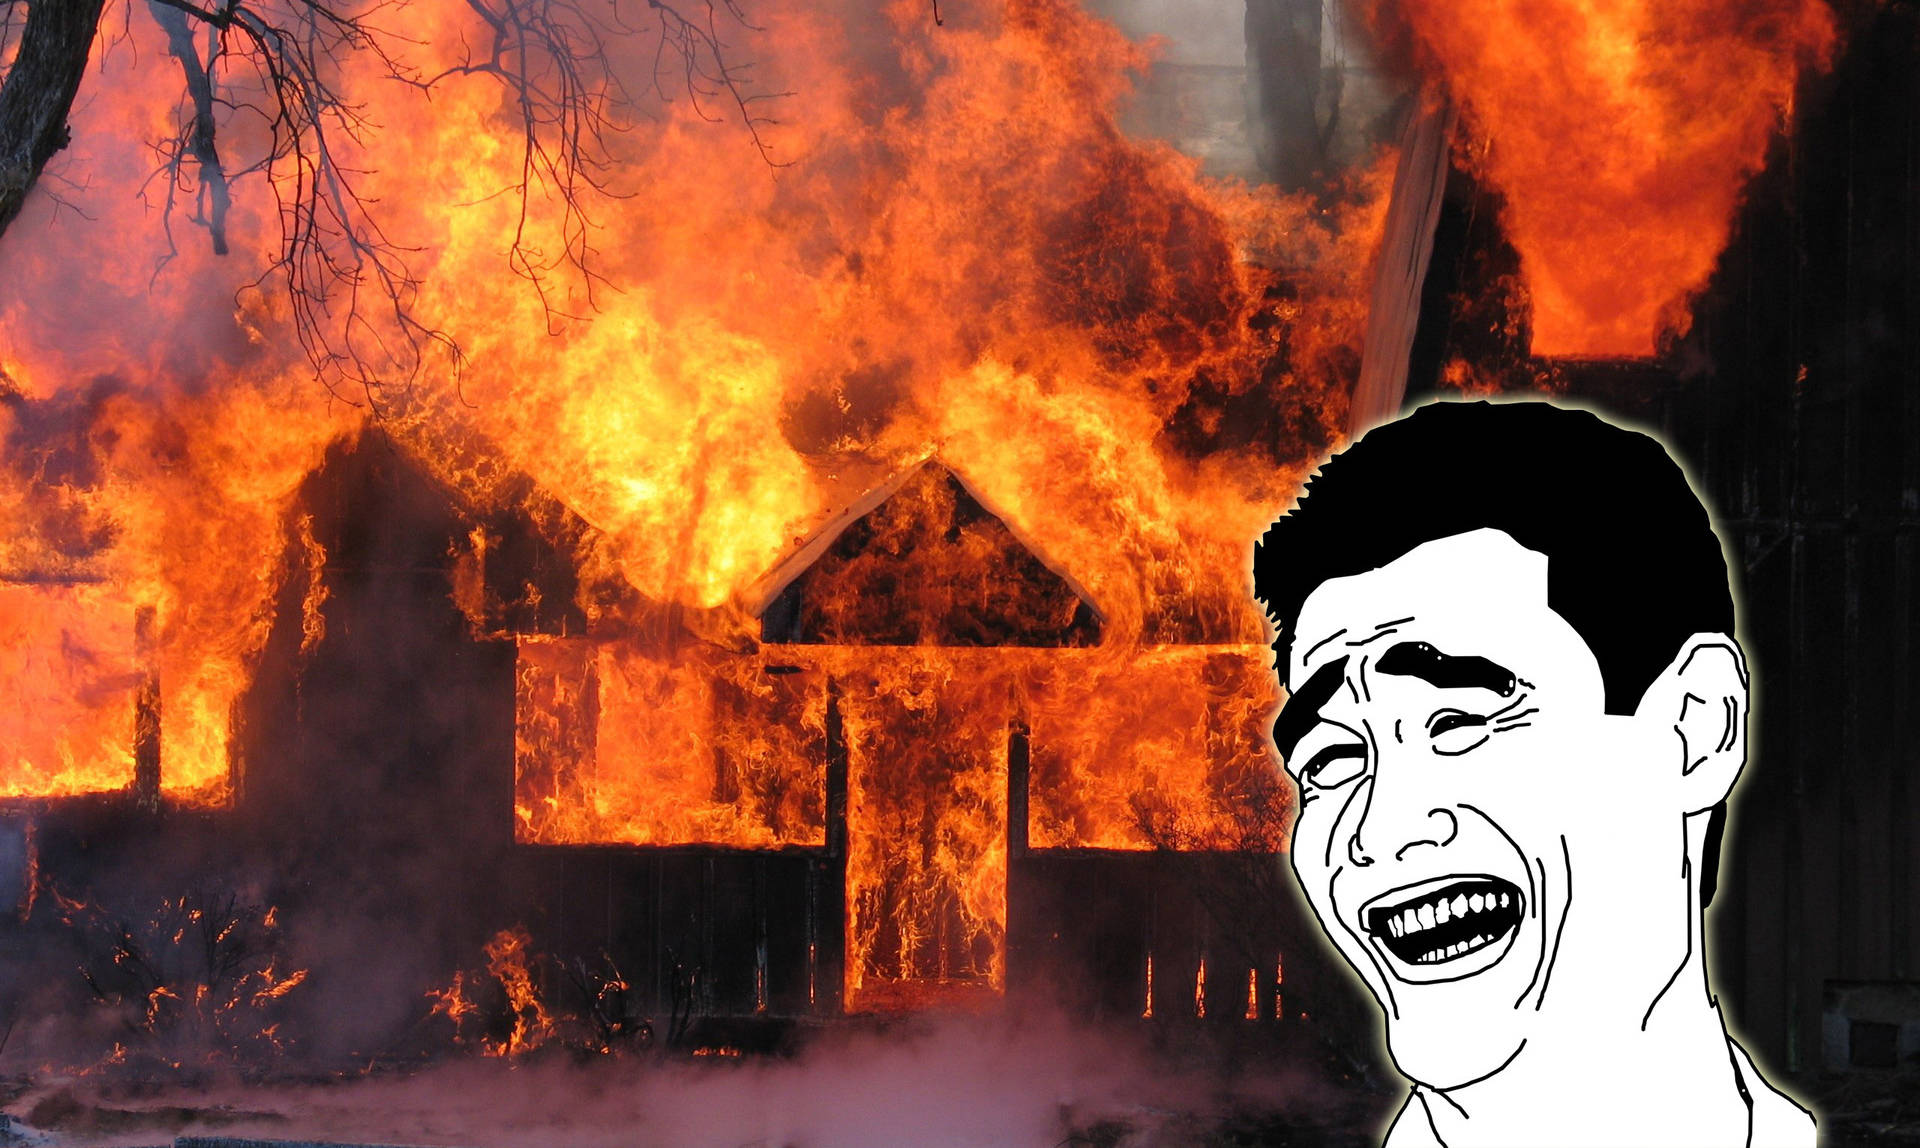 Yao Ming Face Meme And Burning House